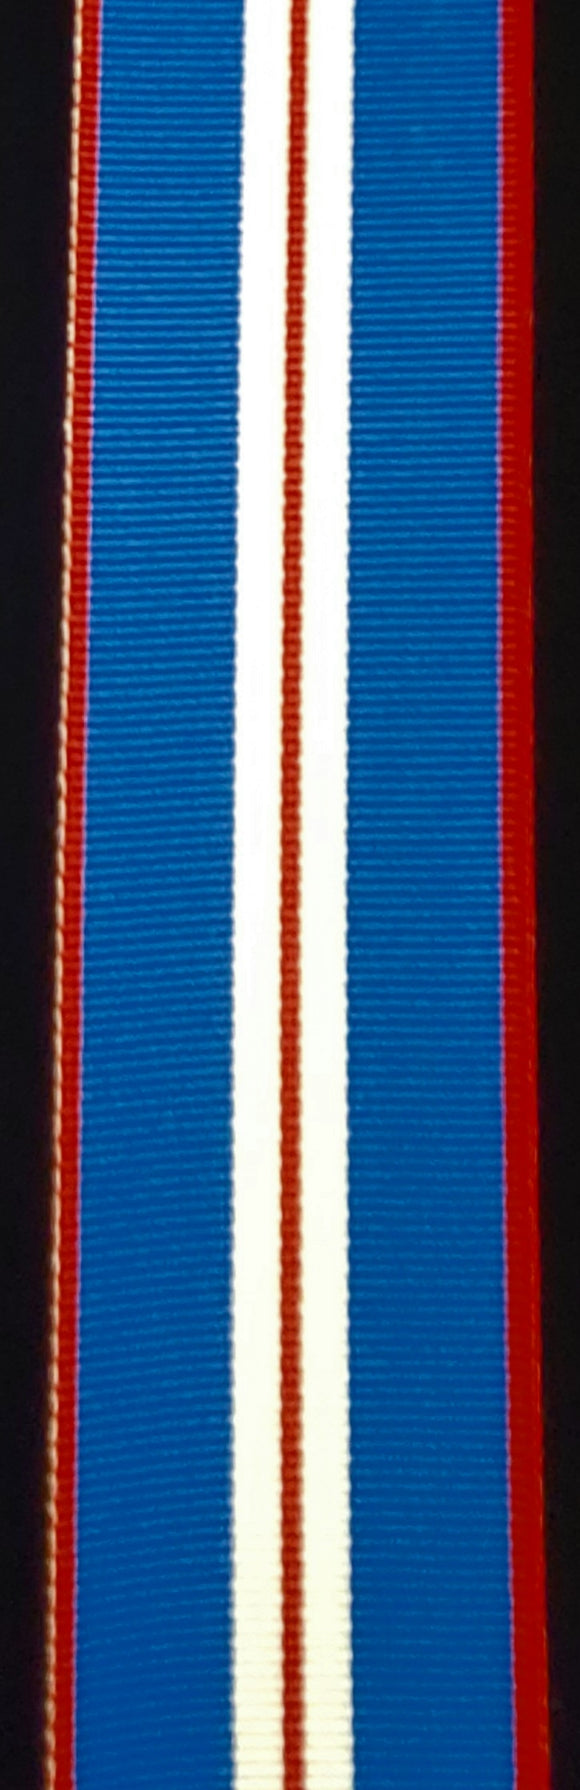 Ribbon, Queen Gold Jubilee Medal 2002